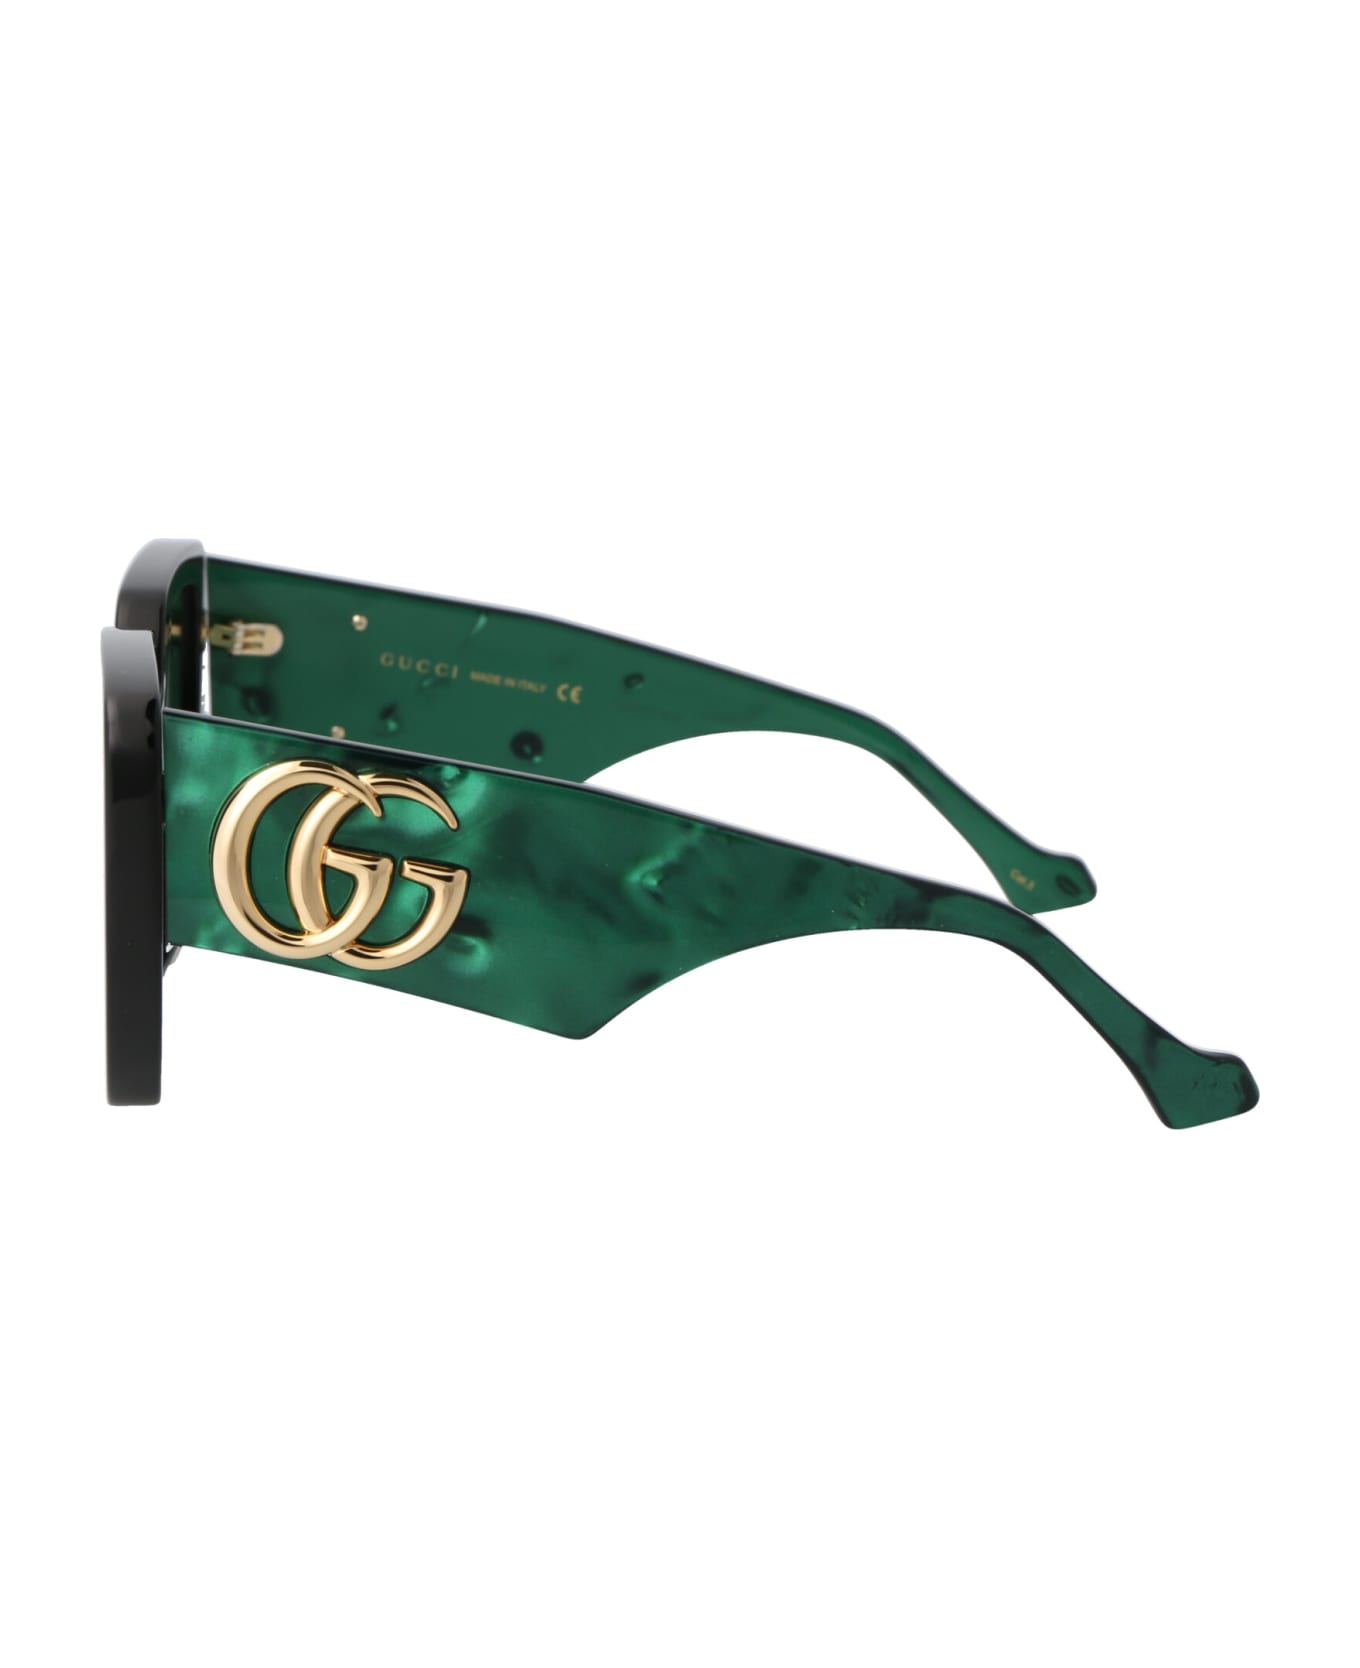 Gucci Eyewear Gg0956s Sunglasses - 001 BLACK GREEN GREEN サングラス